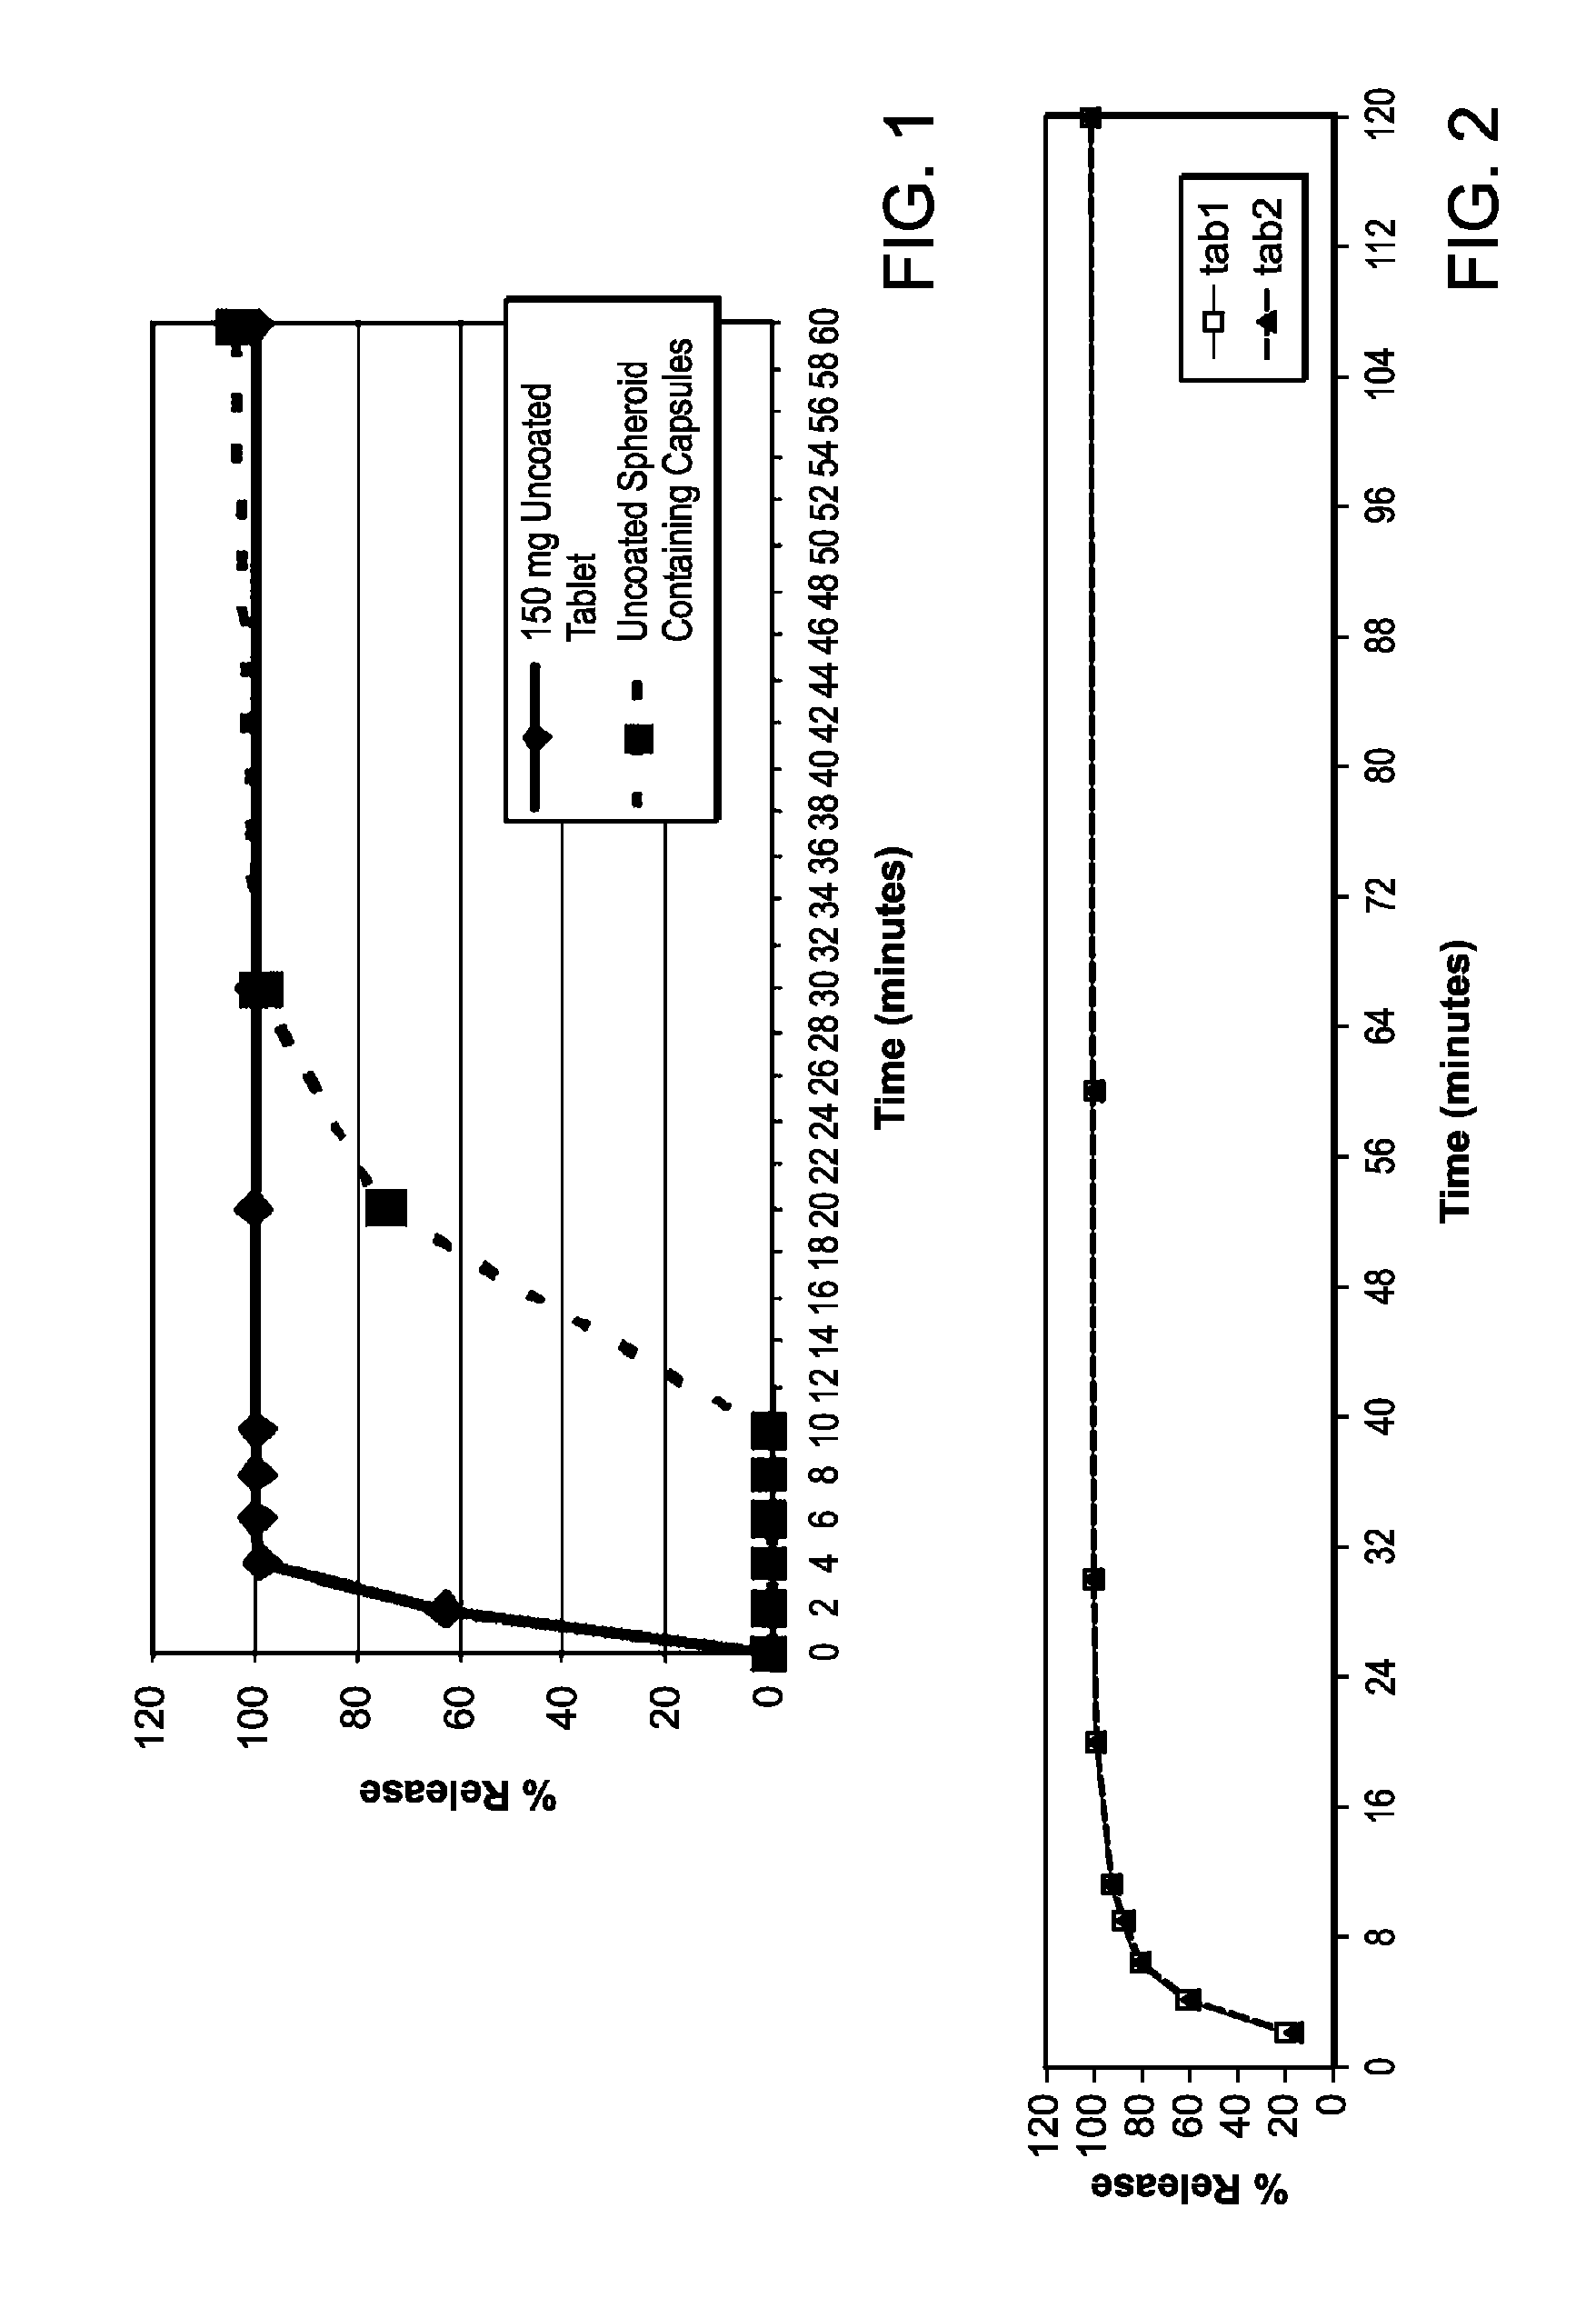 Oral formulations and lipophilic salts of methylnaltrexone